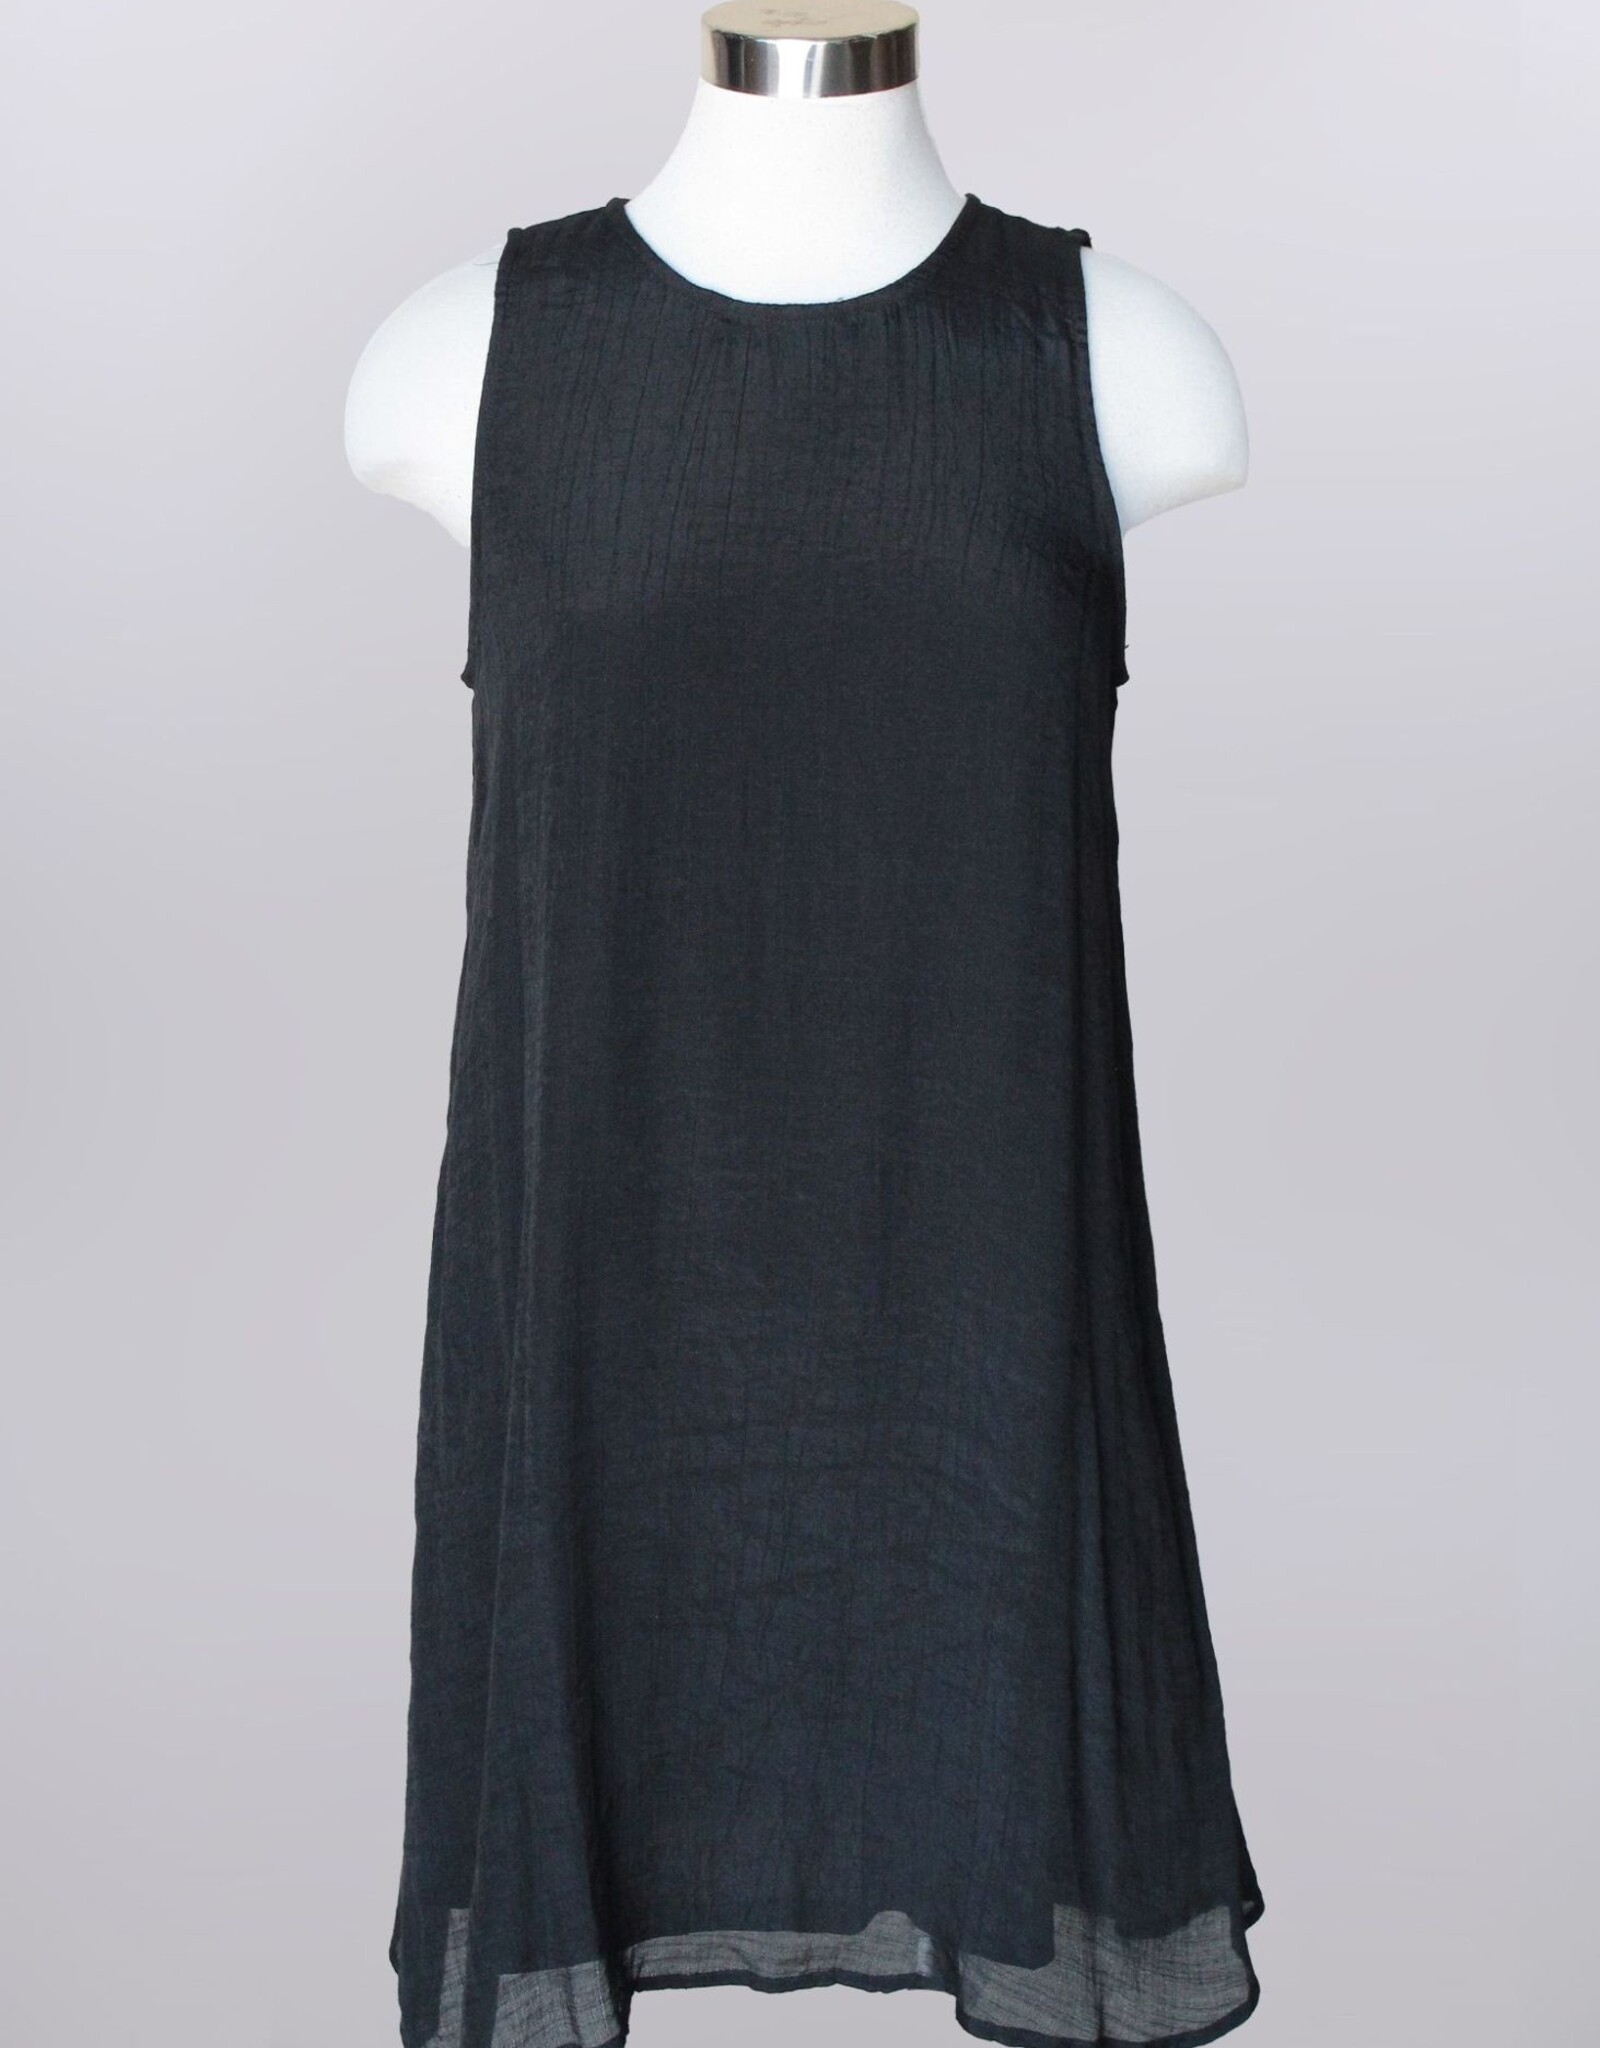 - Black Round Neck Sleeveless Lined Dress